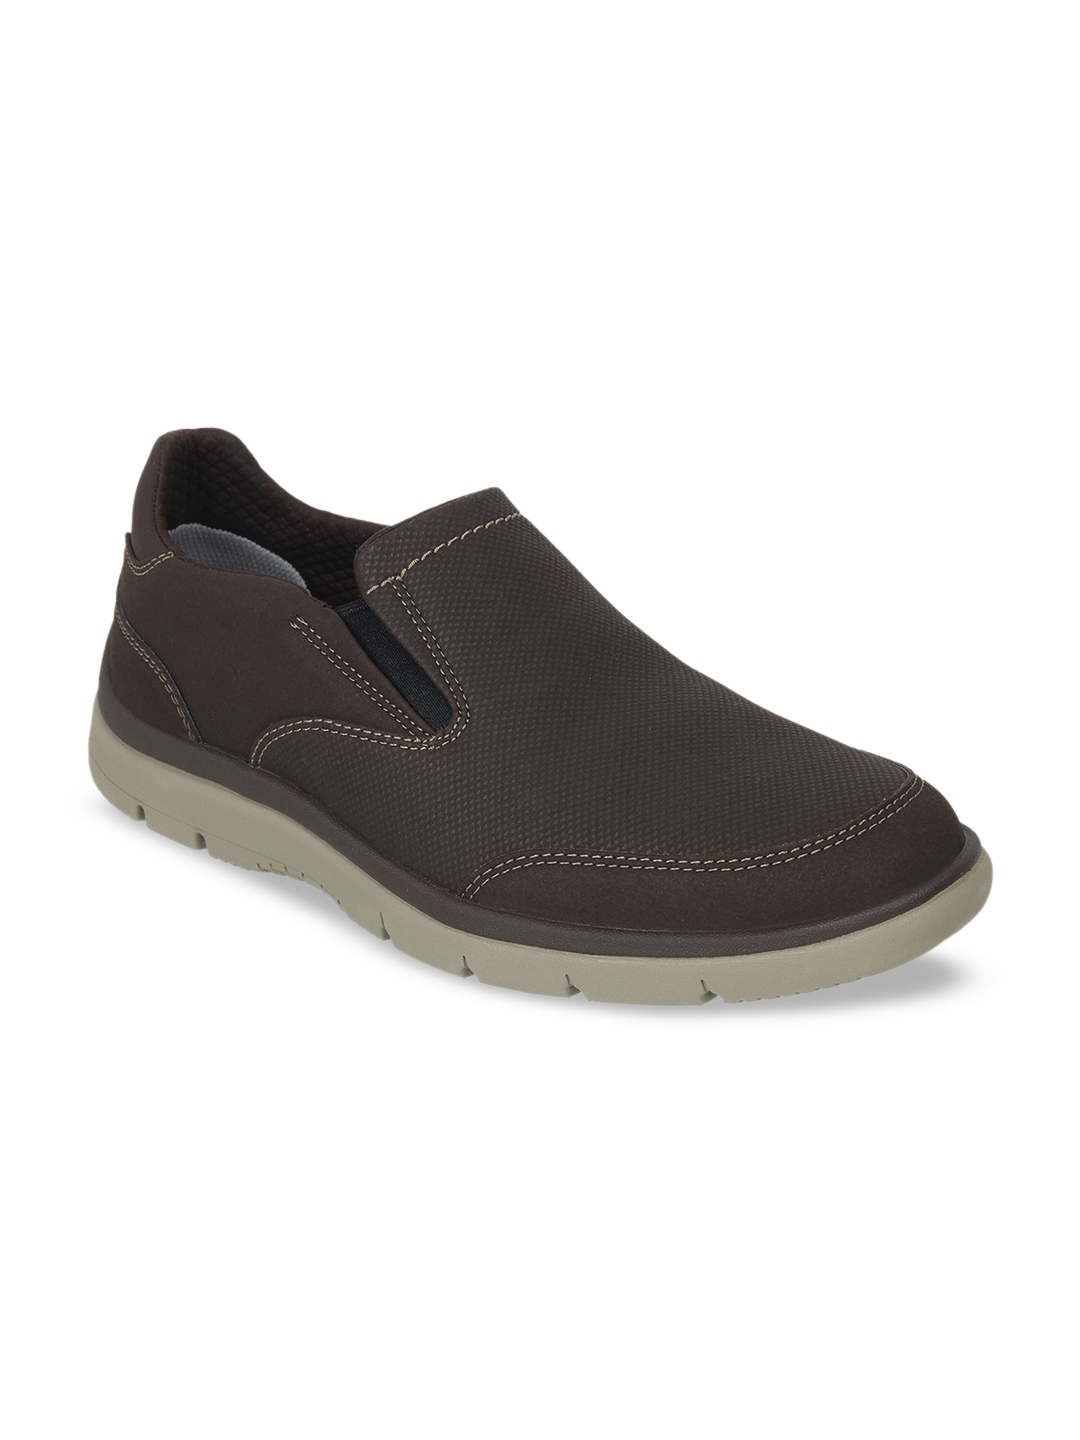 Buy Clarks Men Brown Slip On Sneakers - Casual Shoes for Men 11788798 ...